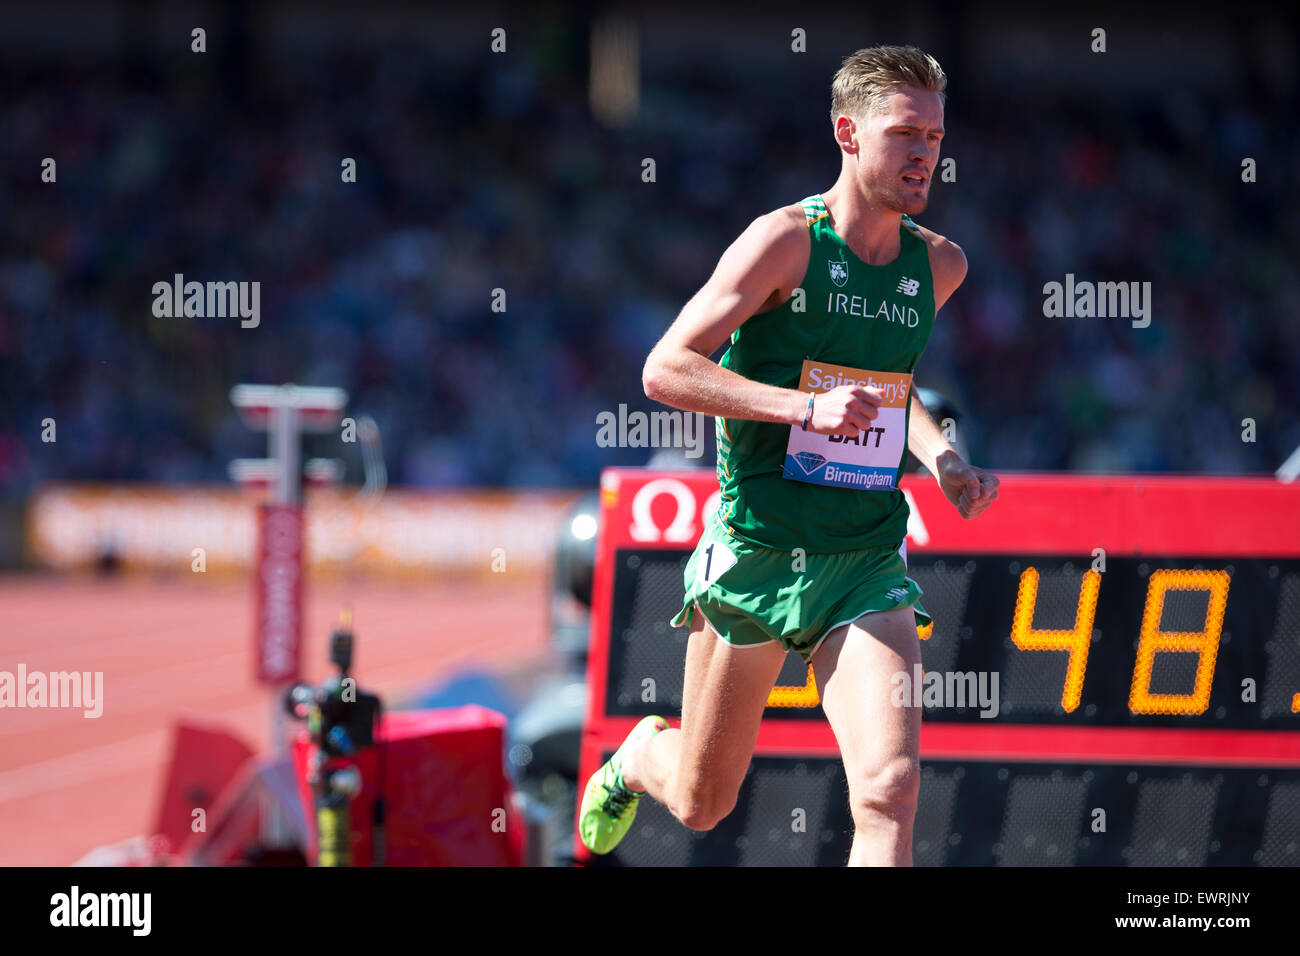 Kevin BATT, Men's 5000m, IAAF Diamond League 2015, Alexander Stadium, Birmingham, UK, 7th June 2015. Stock Photo